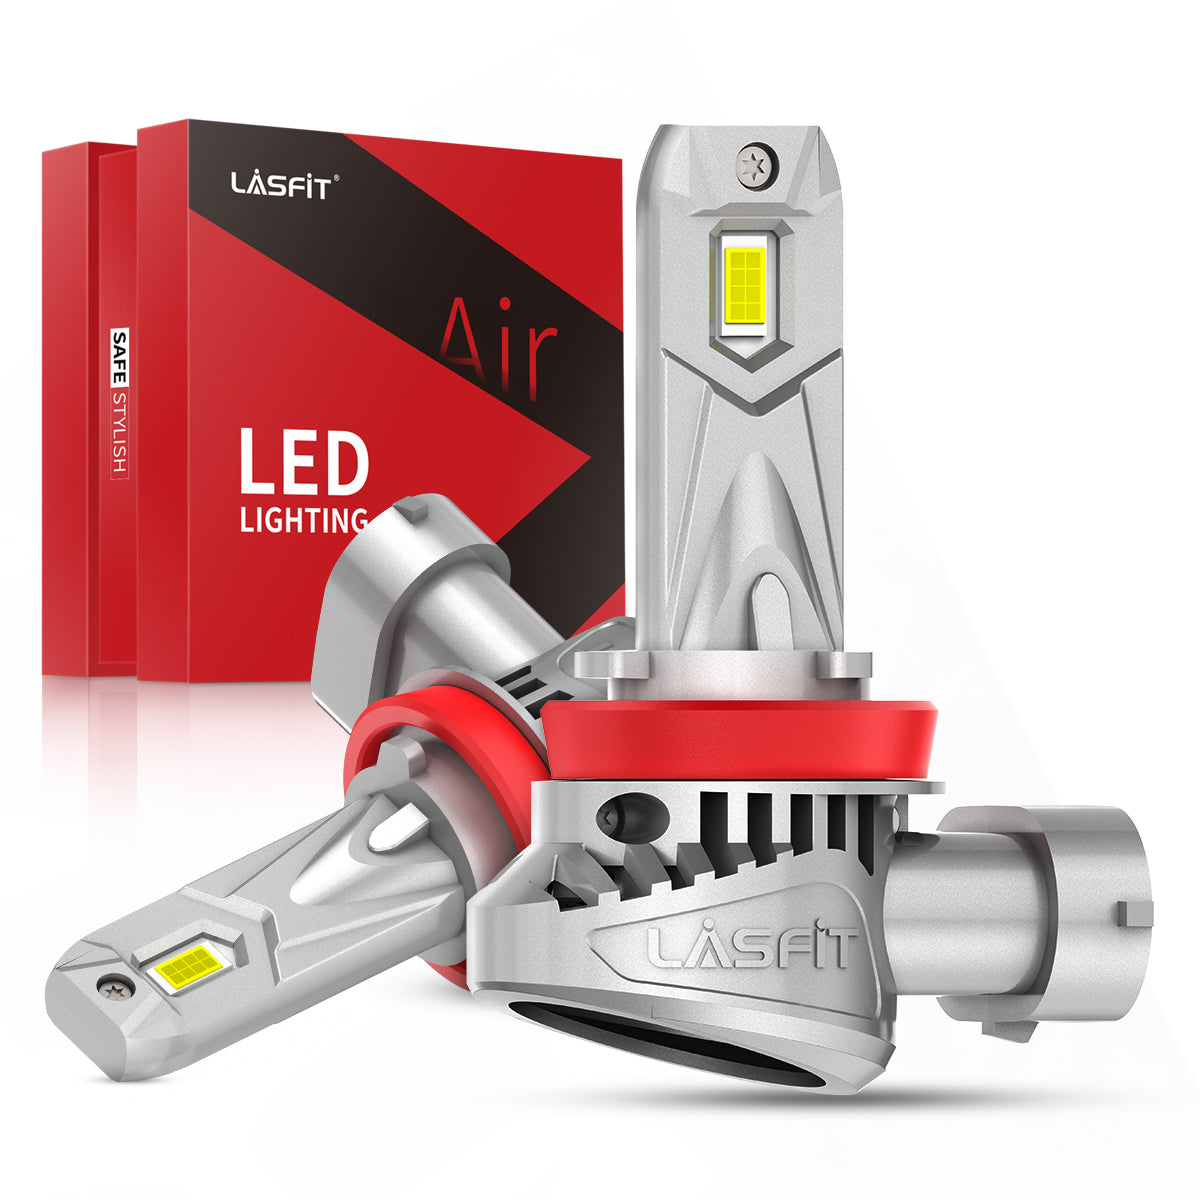 LED Performance Headlight Bulb Set H8/H9/H11/H16 - 5700K - Model 1